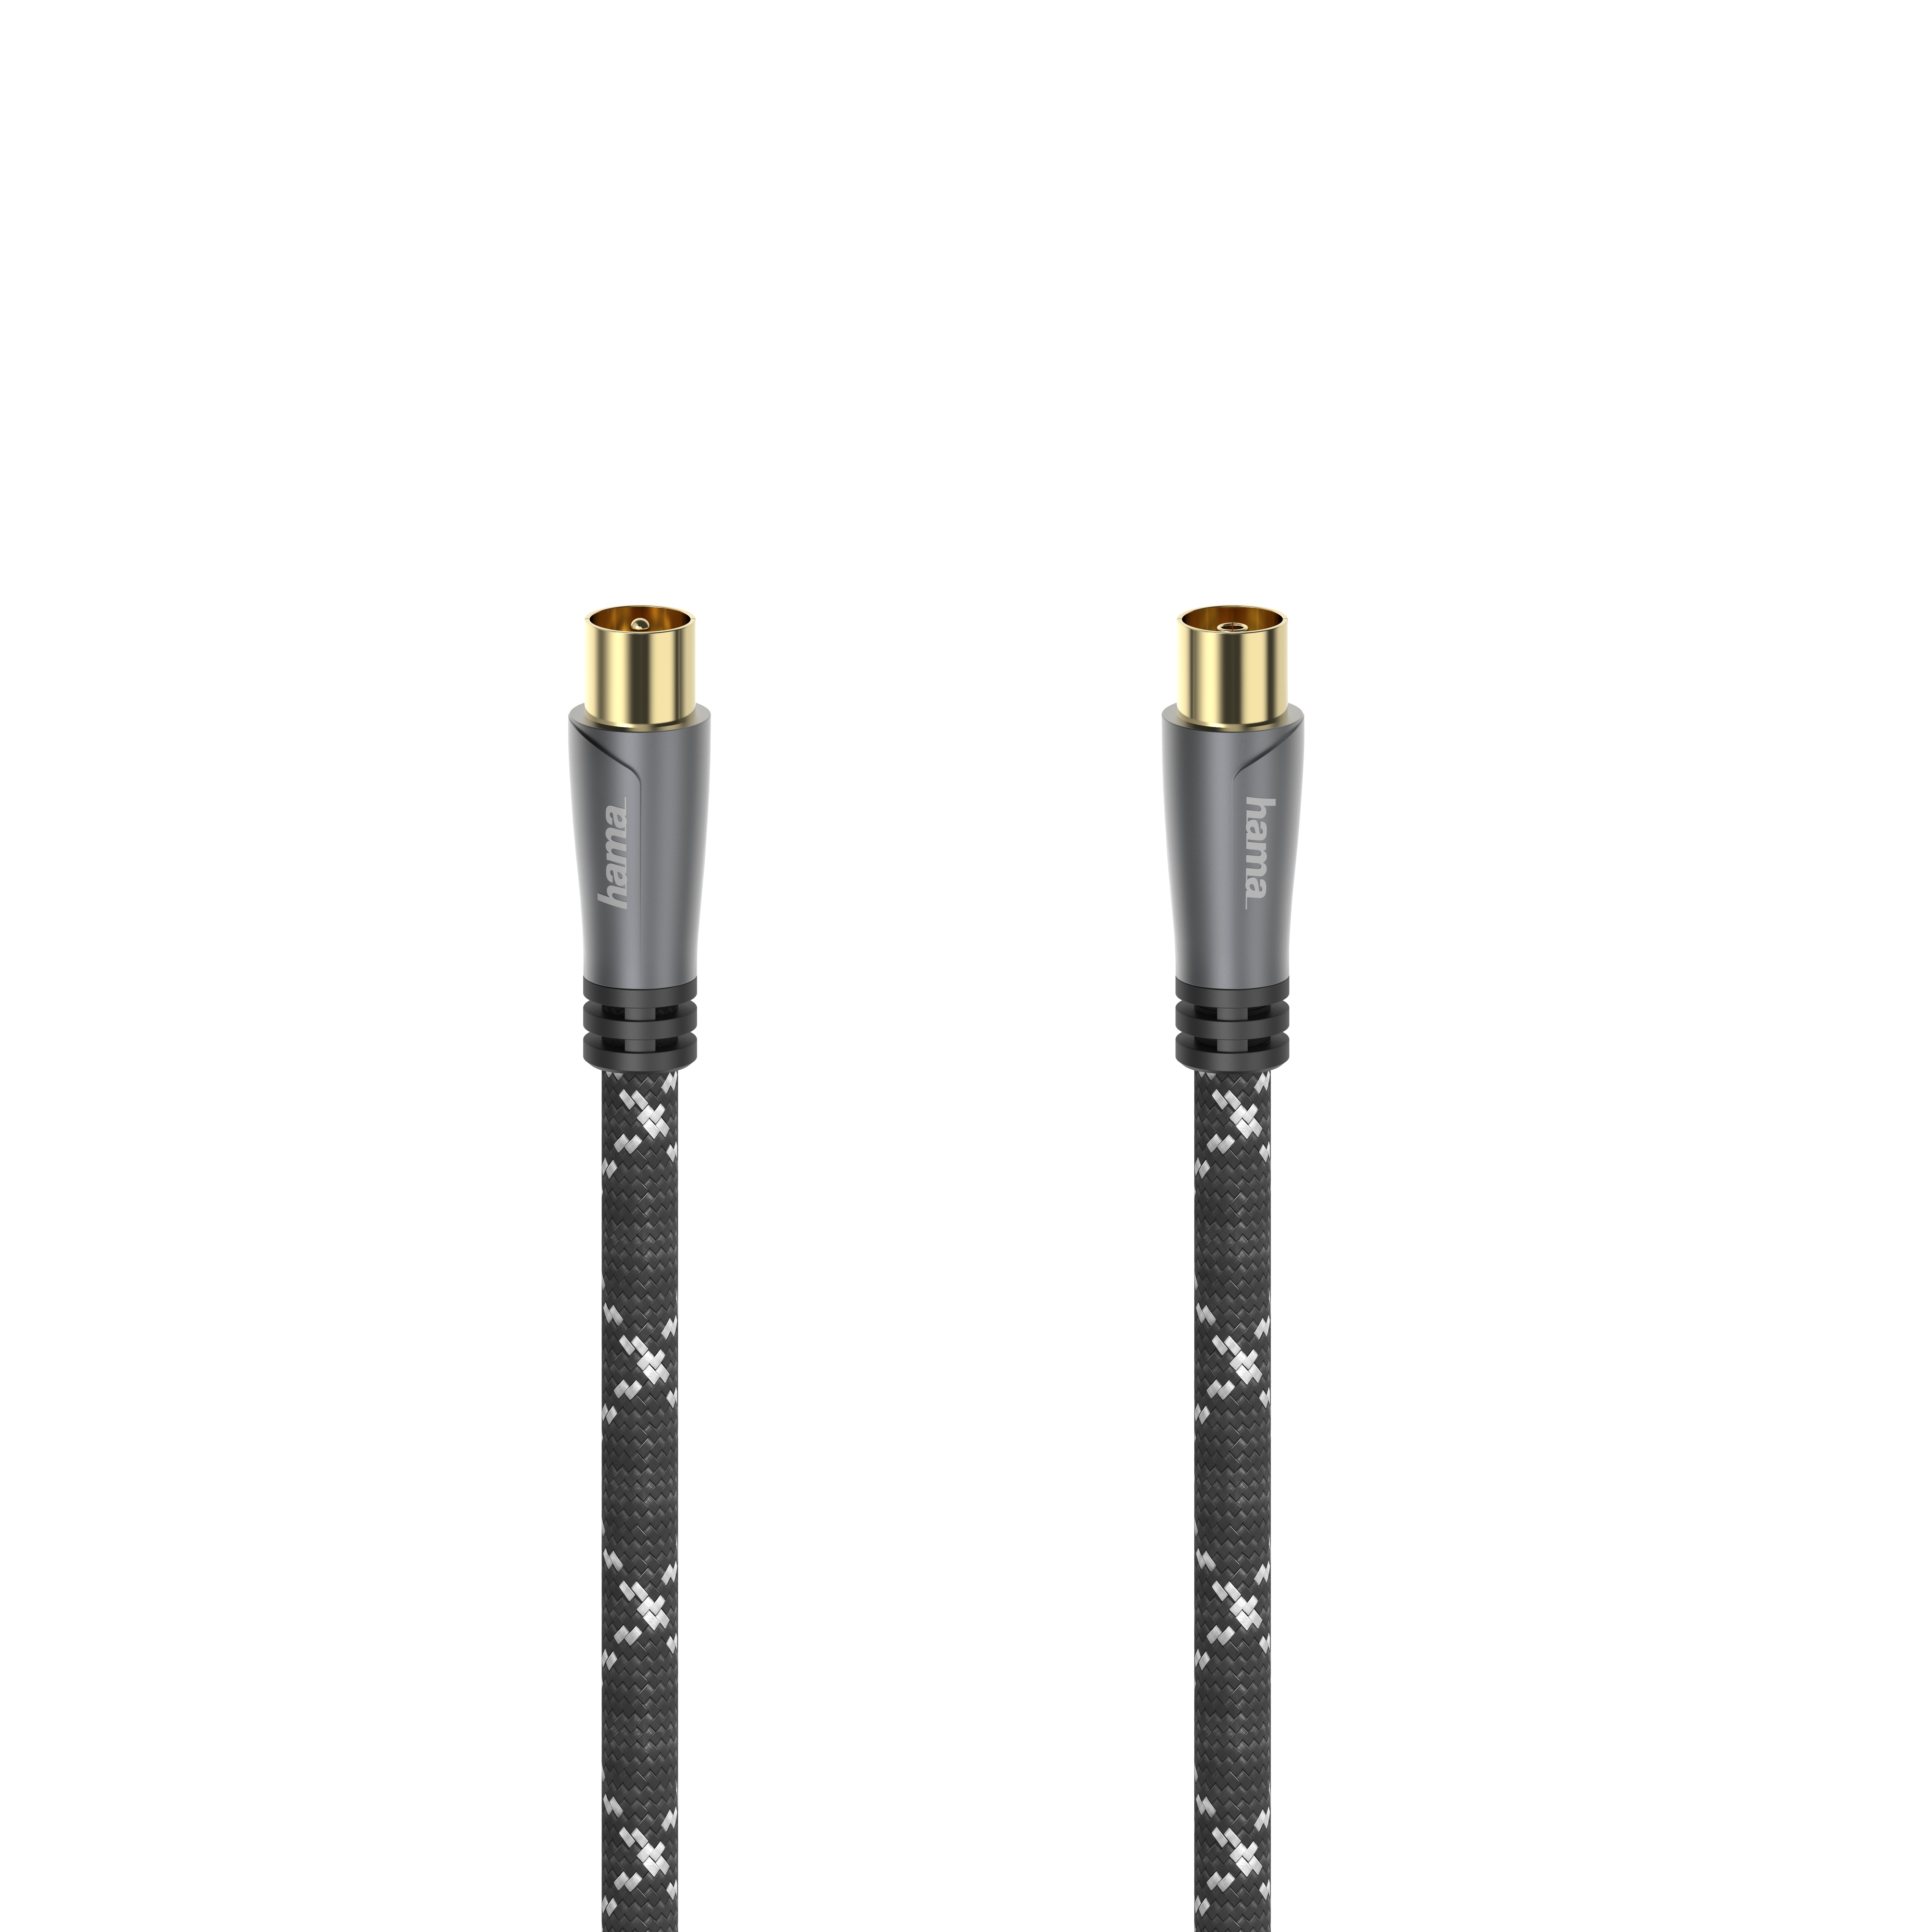 Hama Antennen-Kabel-Stecker-Kupplung, Metall, vergoldet, 3M